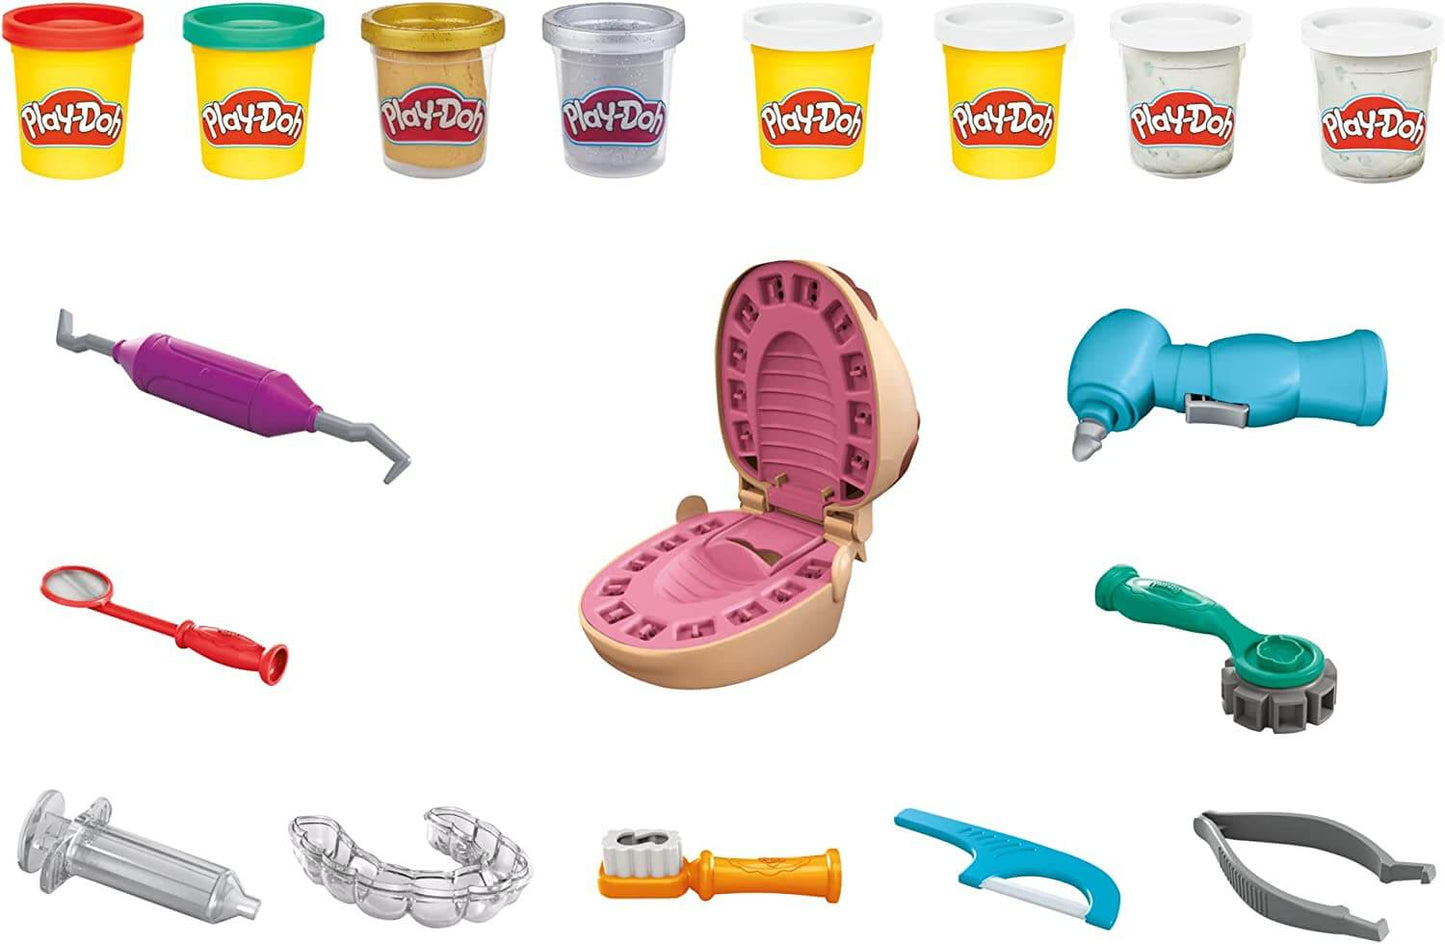 Play-Doh Drill 'n Fill Dentist Playset